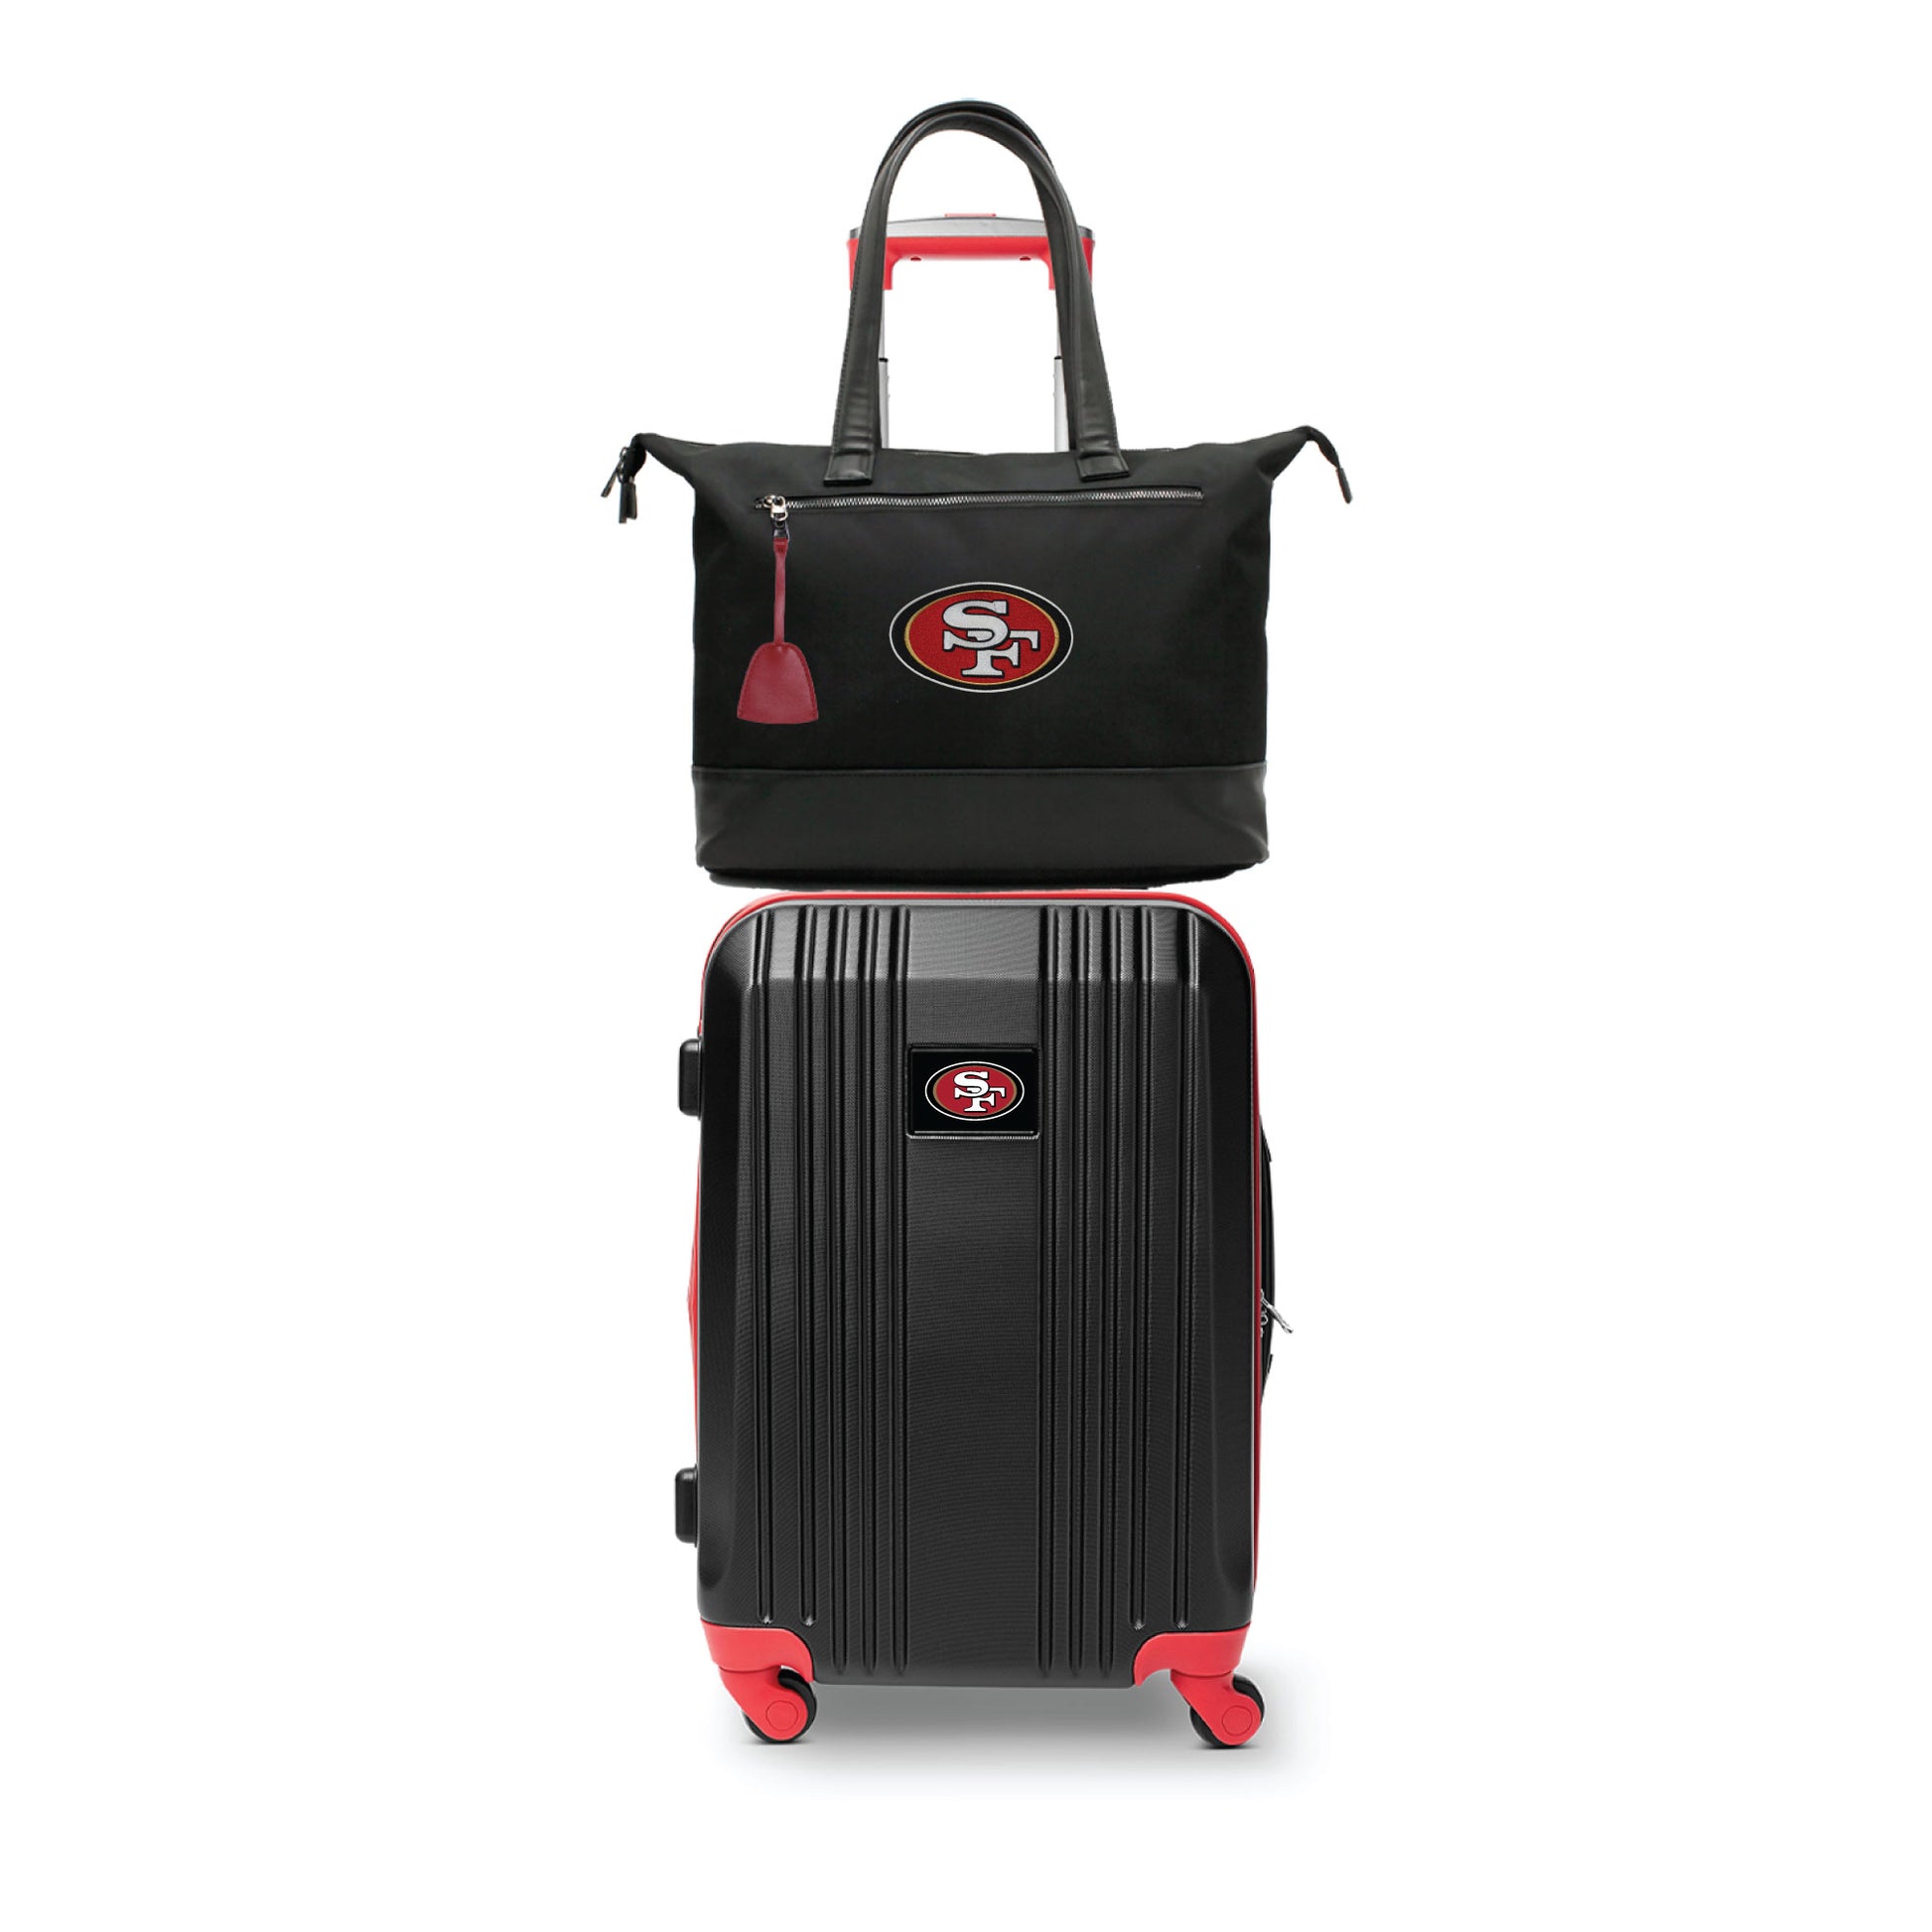 San Francisco 49ers Premium Laptop Tote Bag and Luggage Set